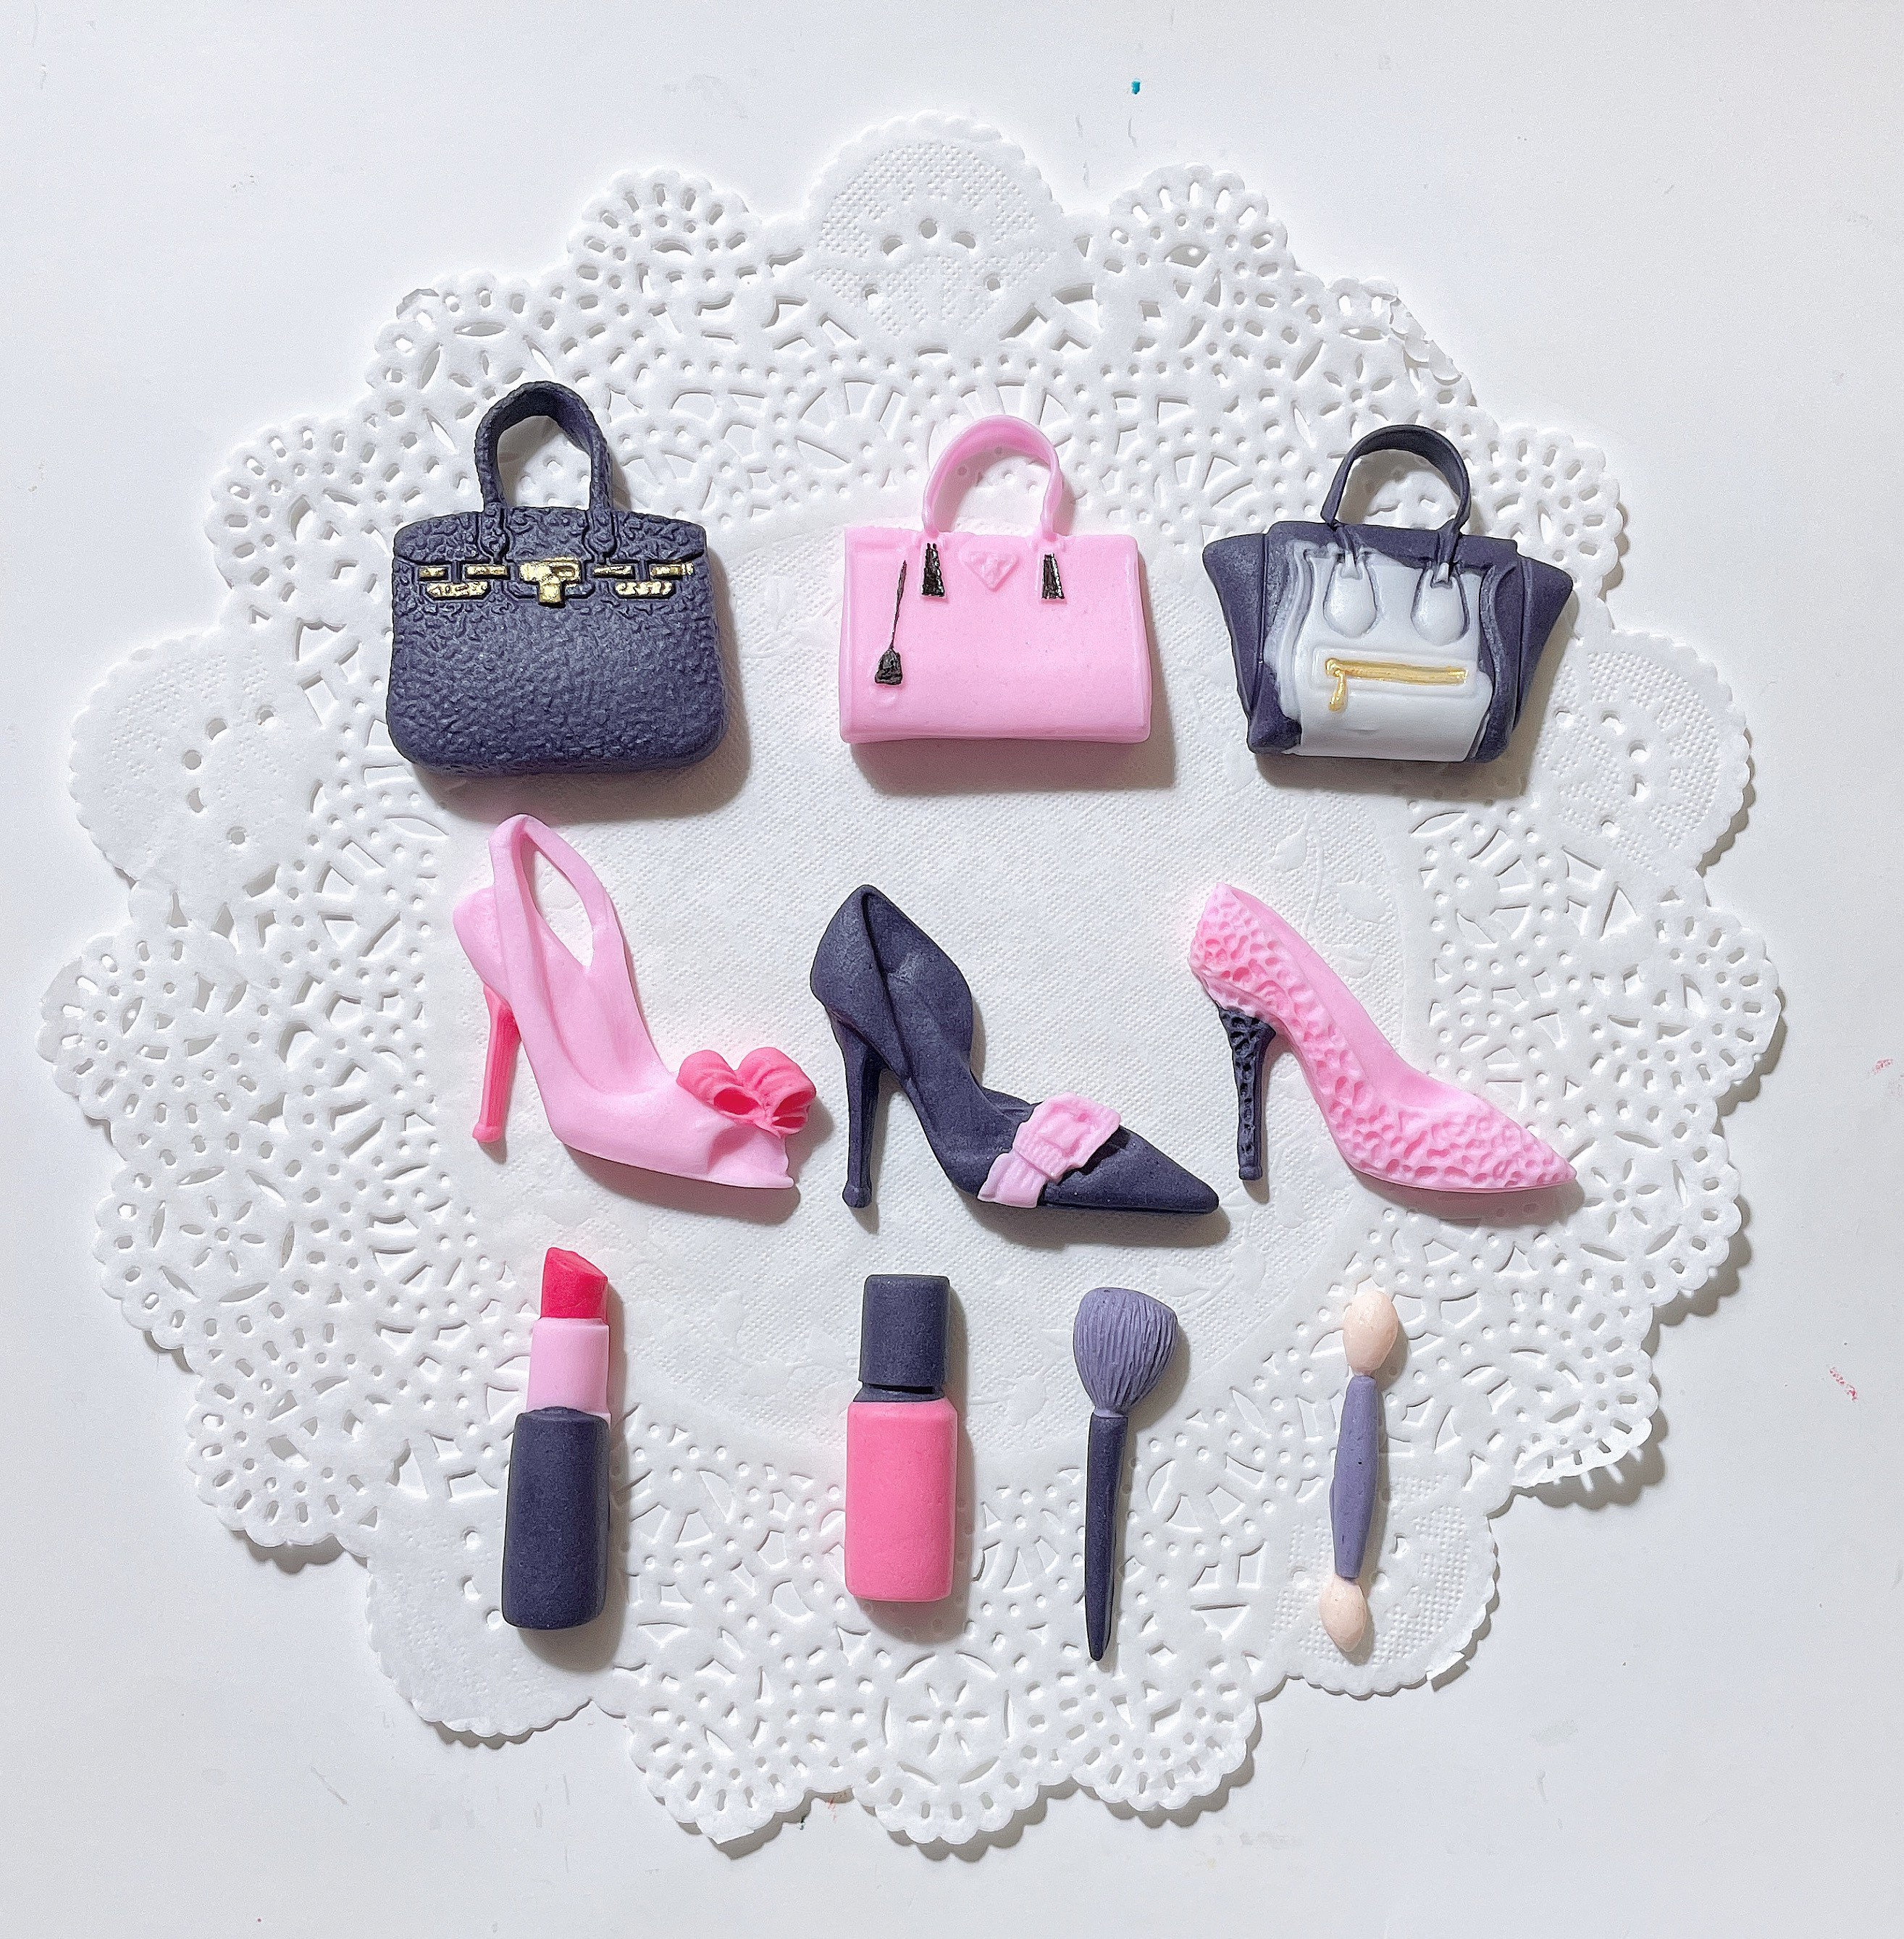 Louis Vuitton Mini Handbag Cupcake toppers - Decorated - CakesDecor